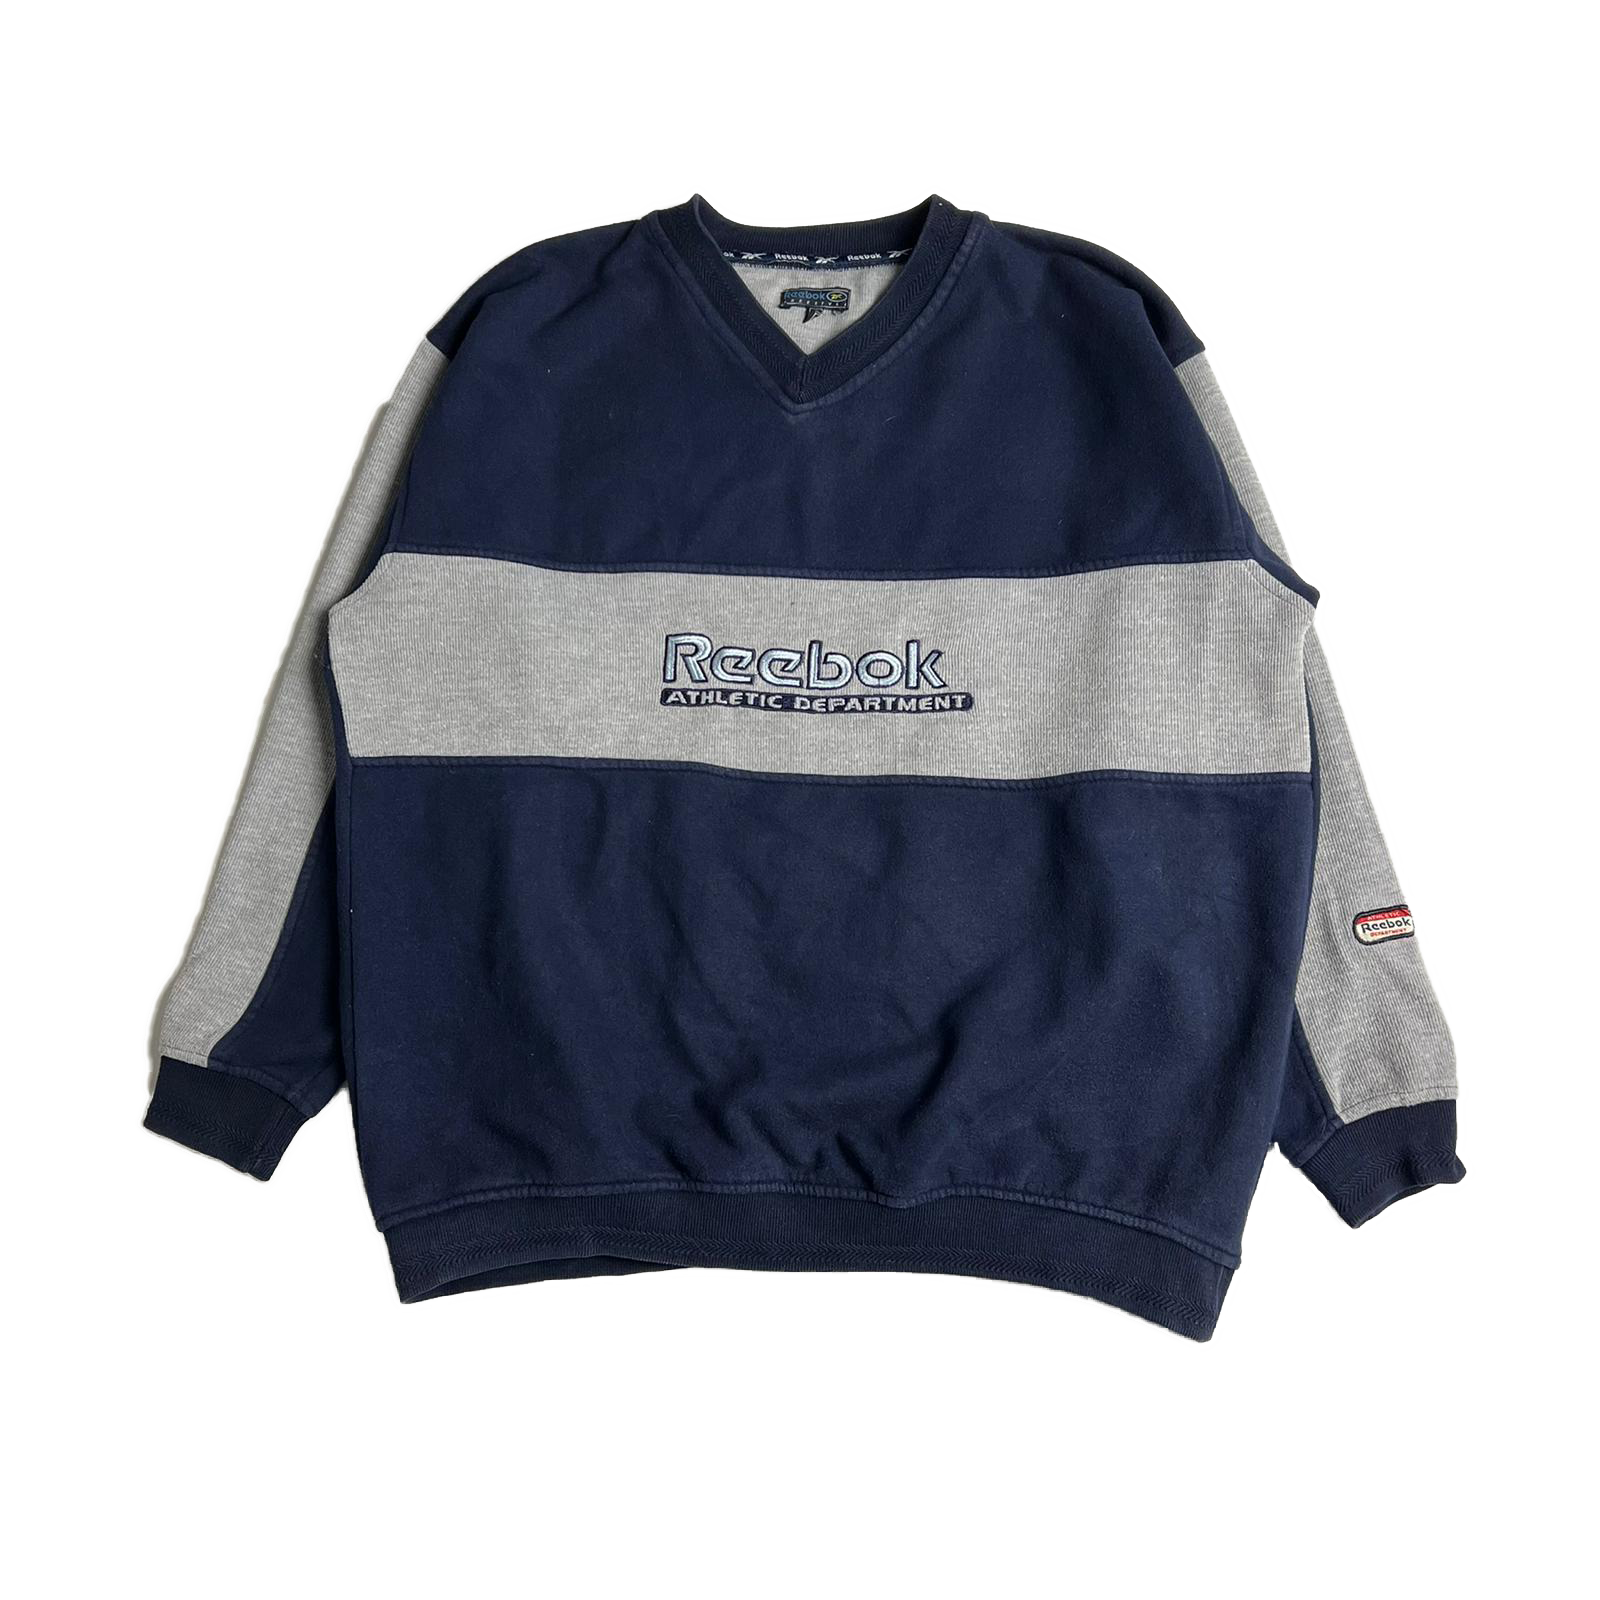 90's Reebok sweatshirt